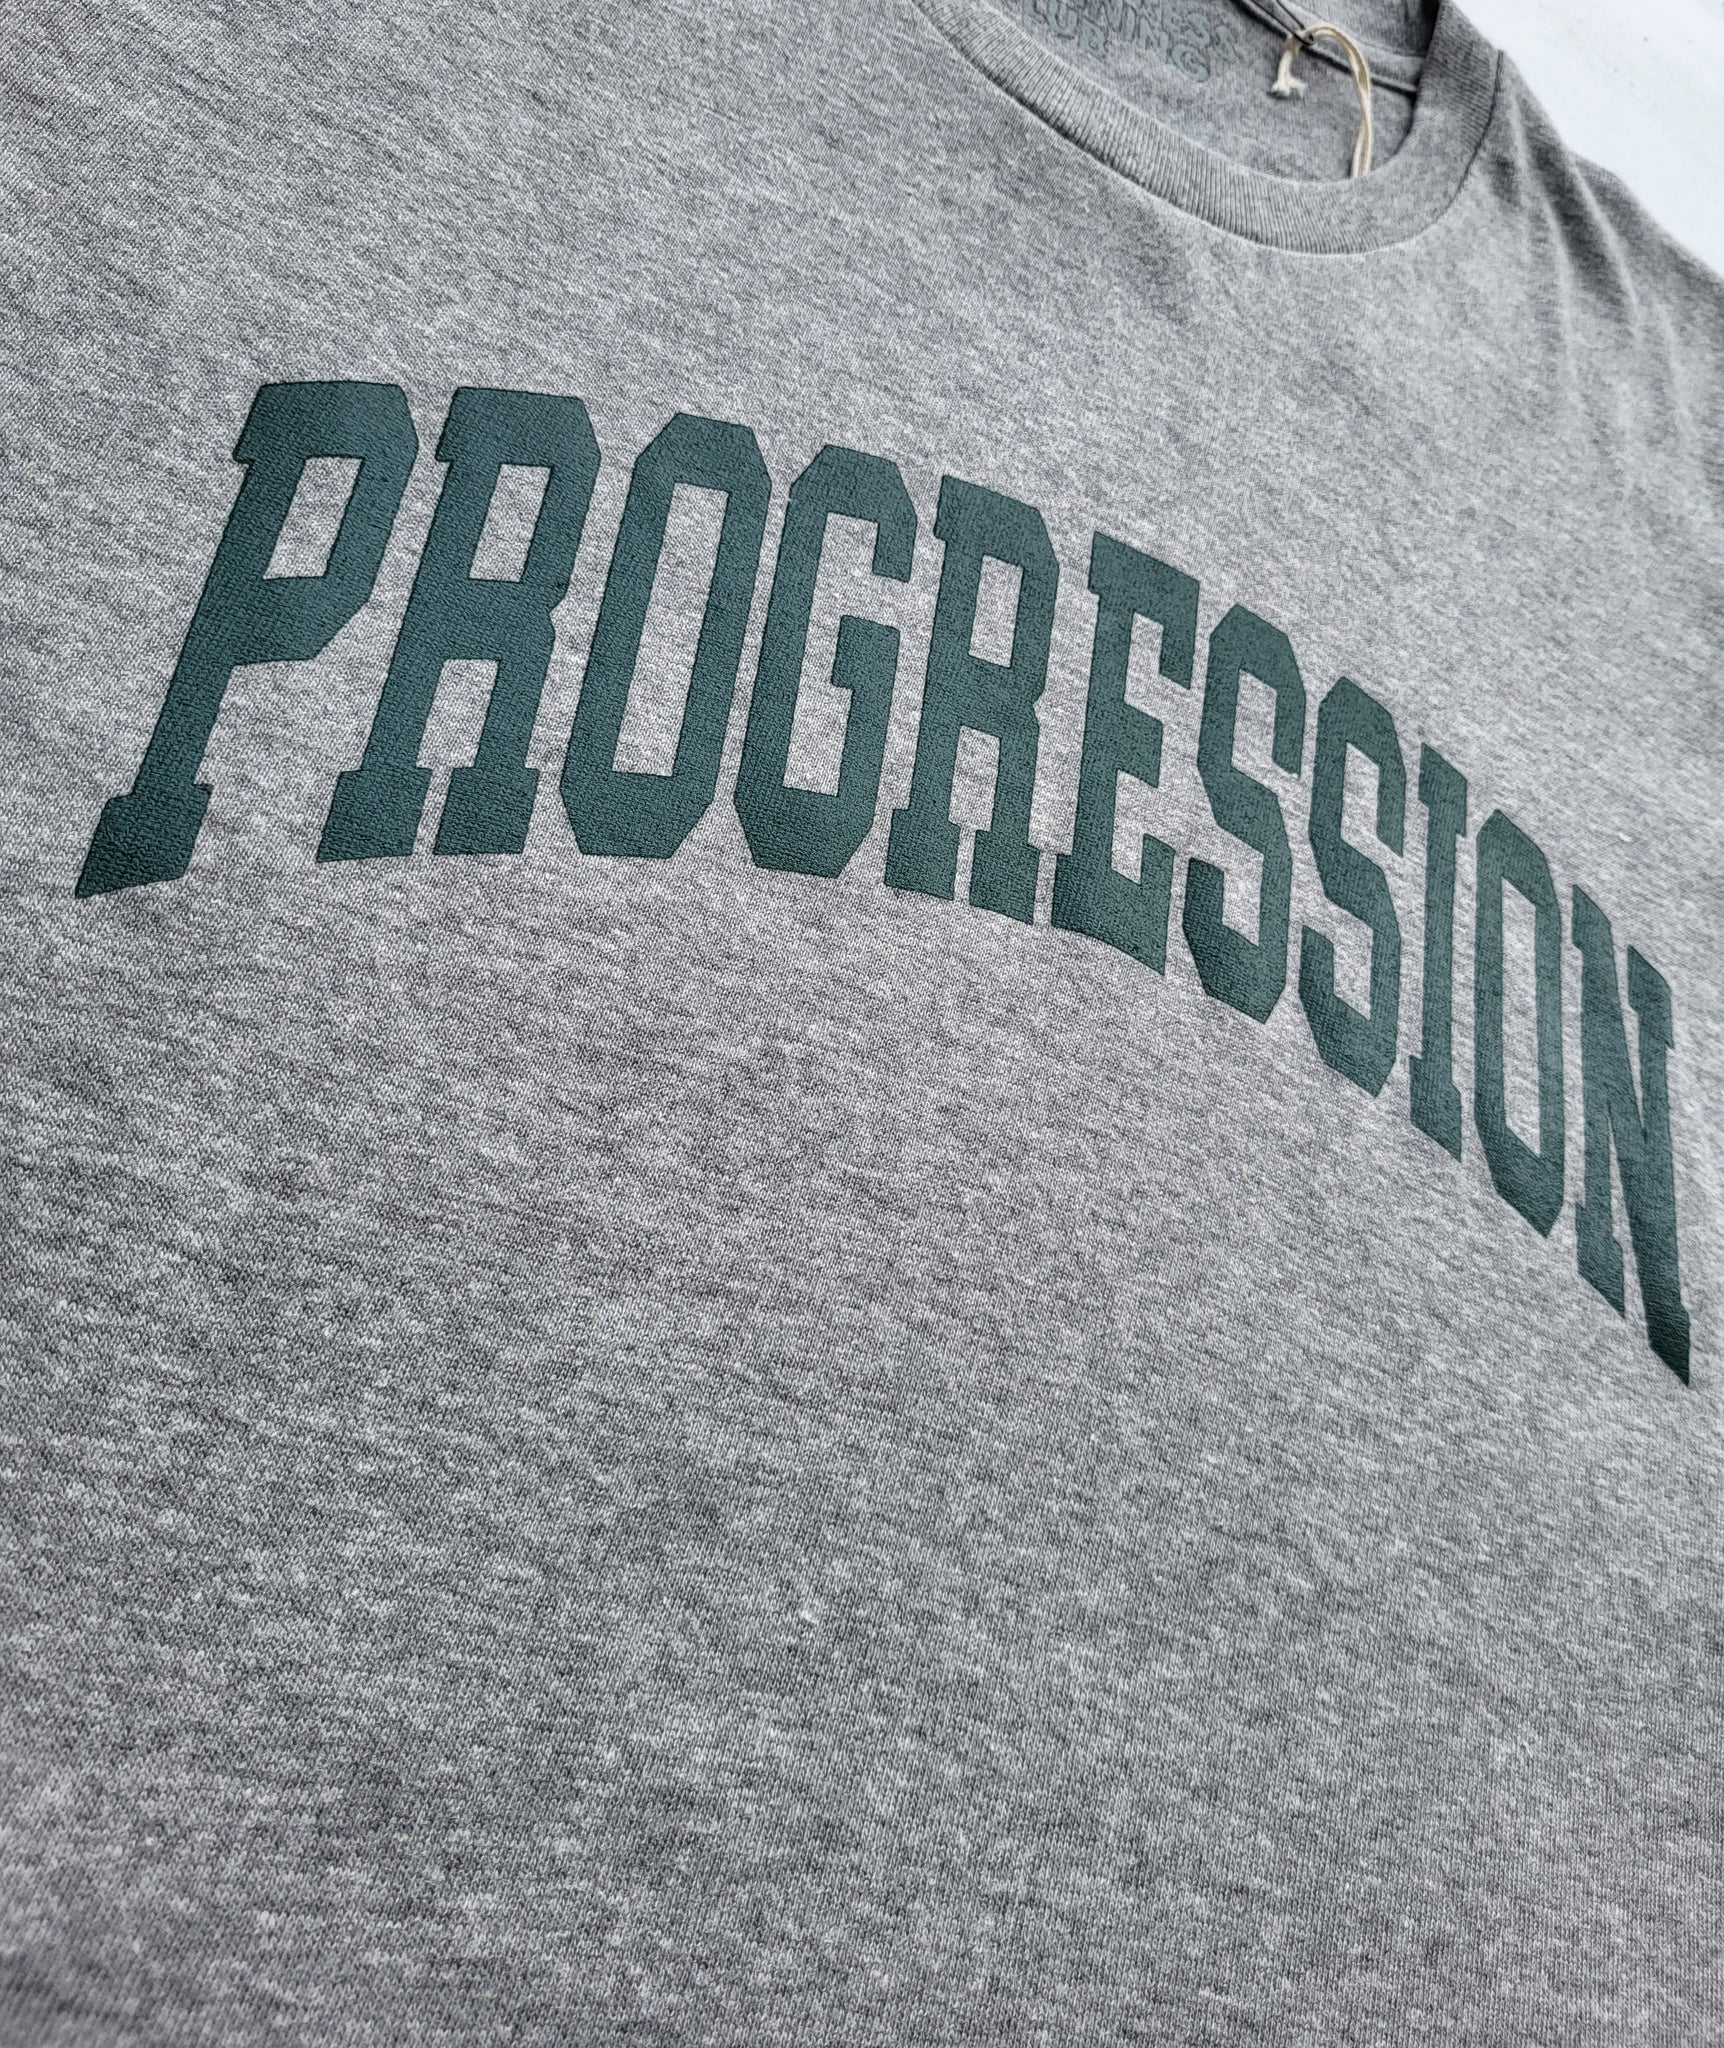 Progress Running Club Progression Arc T-Shirt in Heather Grey and Black